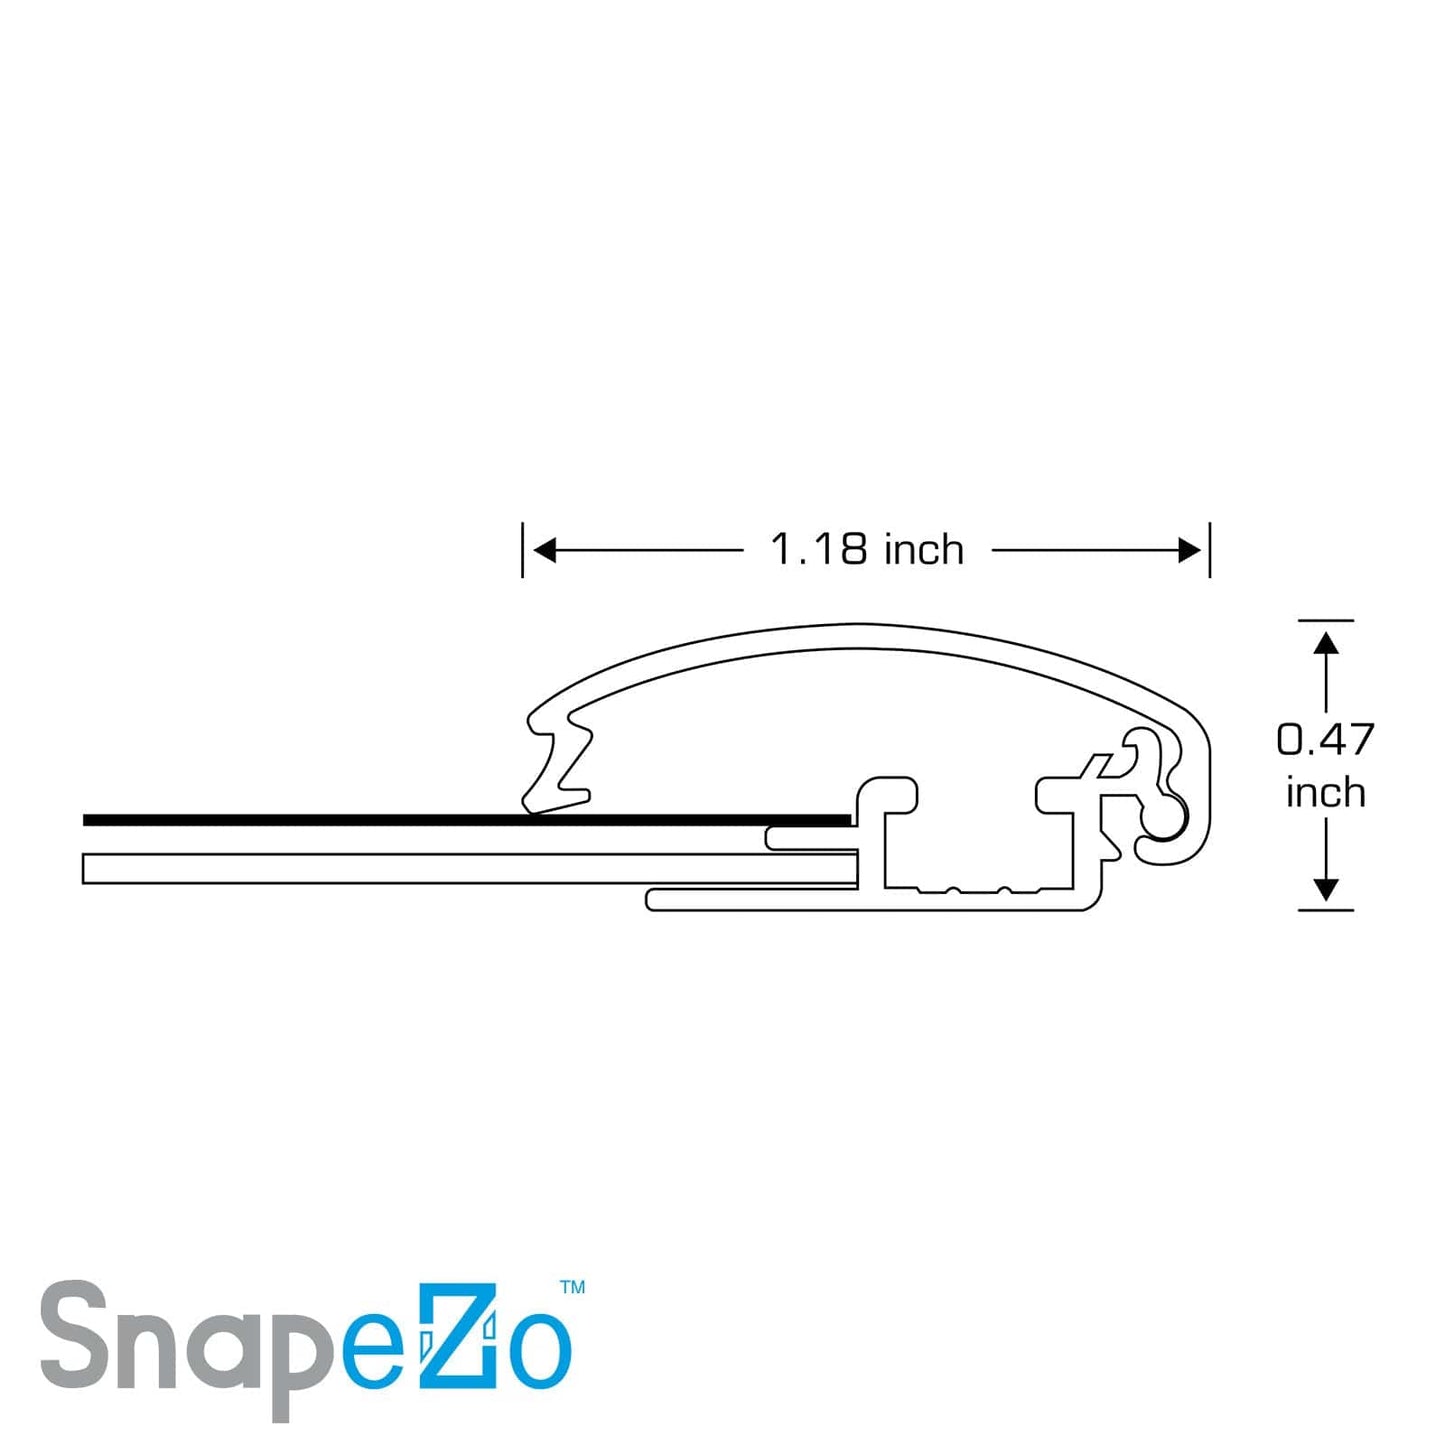 16x24 Black SnapeZo® Snap Frame - 1.2" Profile - Snap Frames Direct